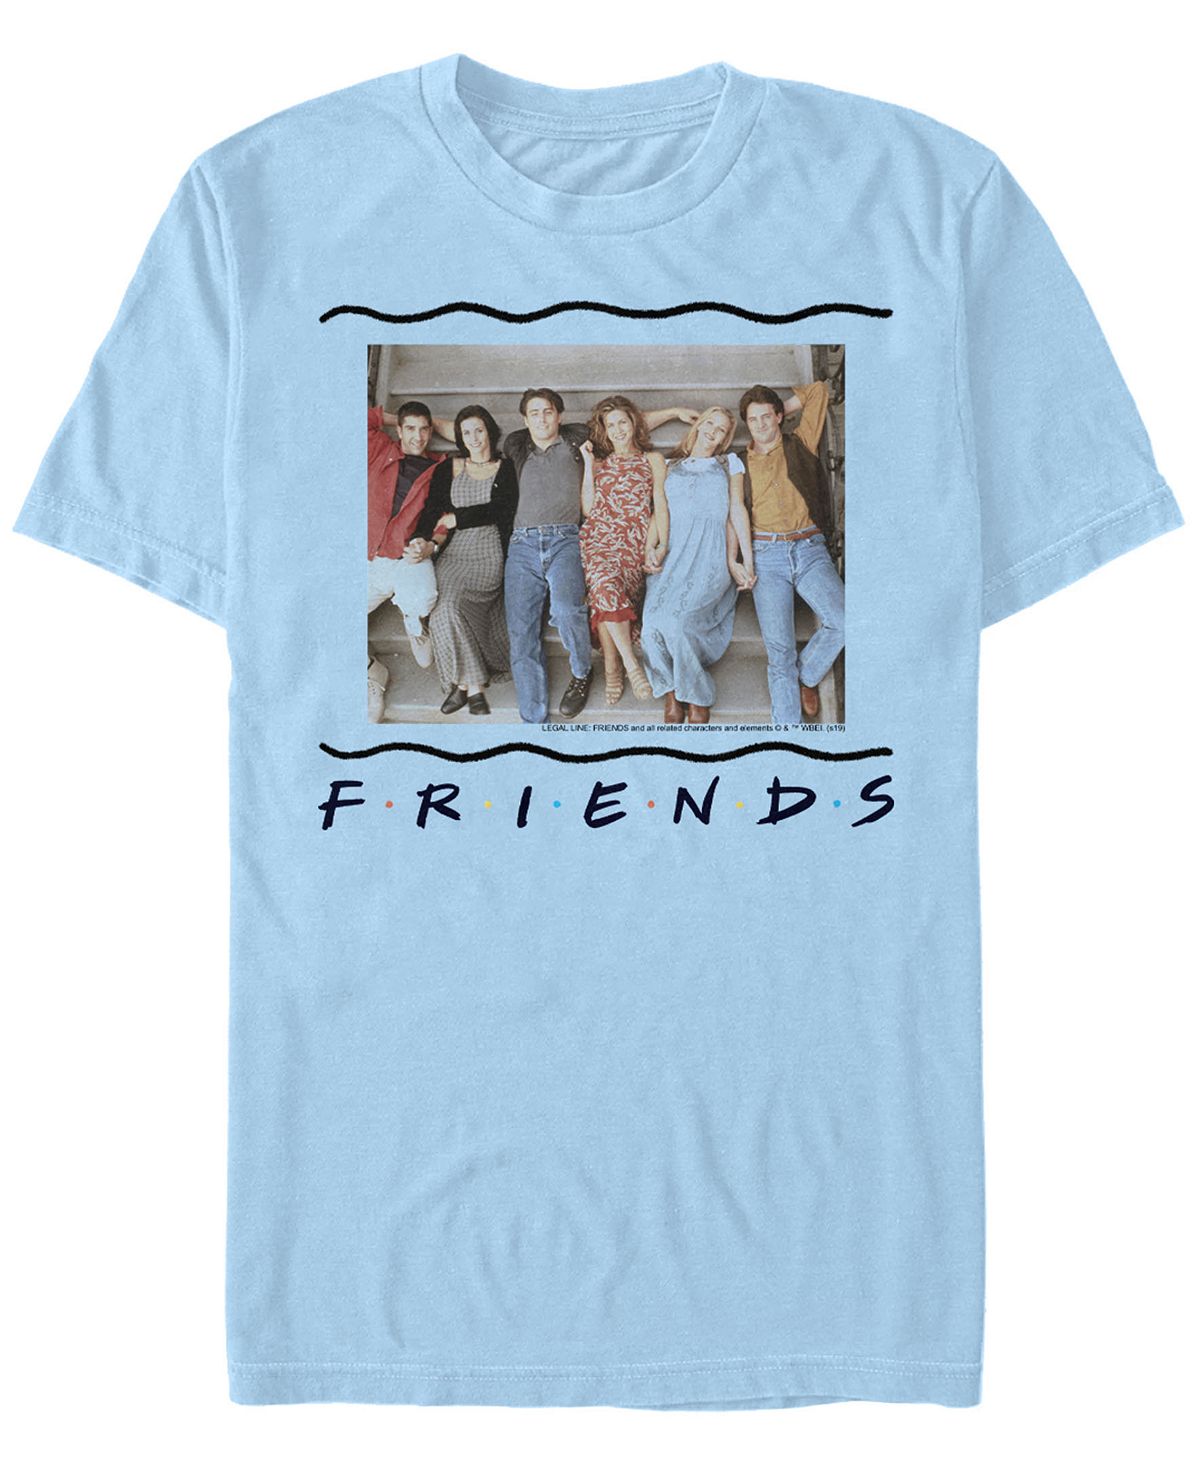 мужская футболка с коротким рукавом parks project yosemite в стиле 90 х годов Мужская футболка с коротким рукавом с групповым портретом 90-х годов friends Fifth Sun, светло-синий